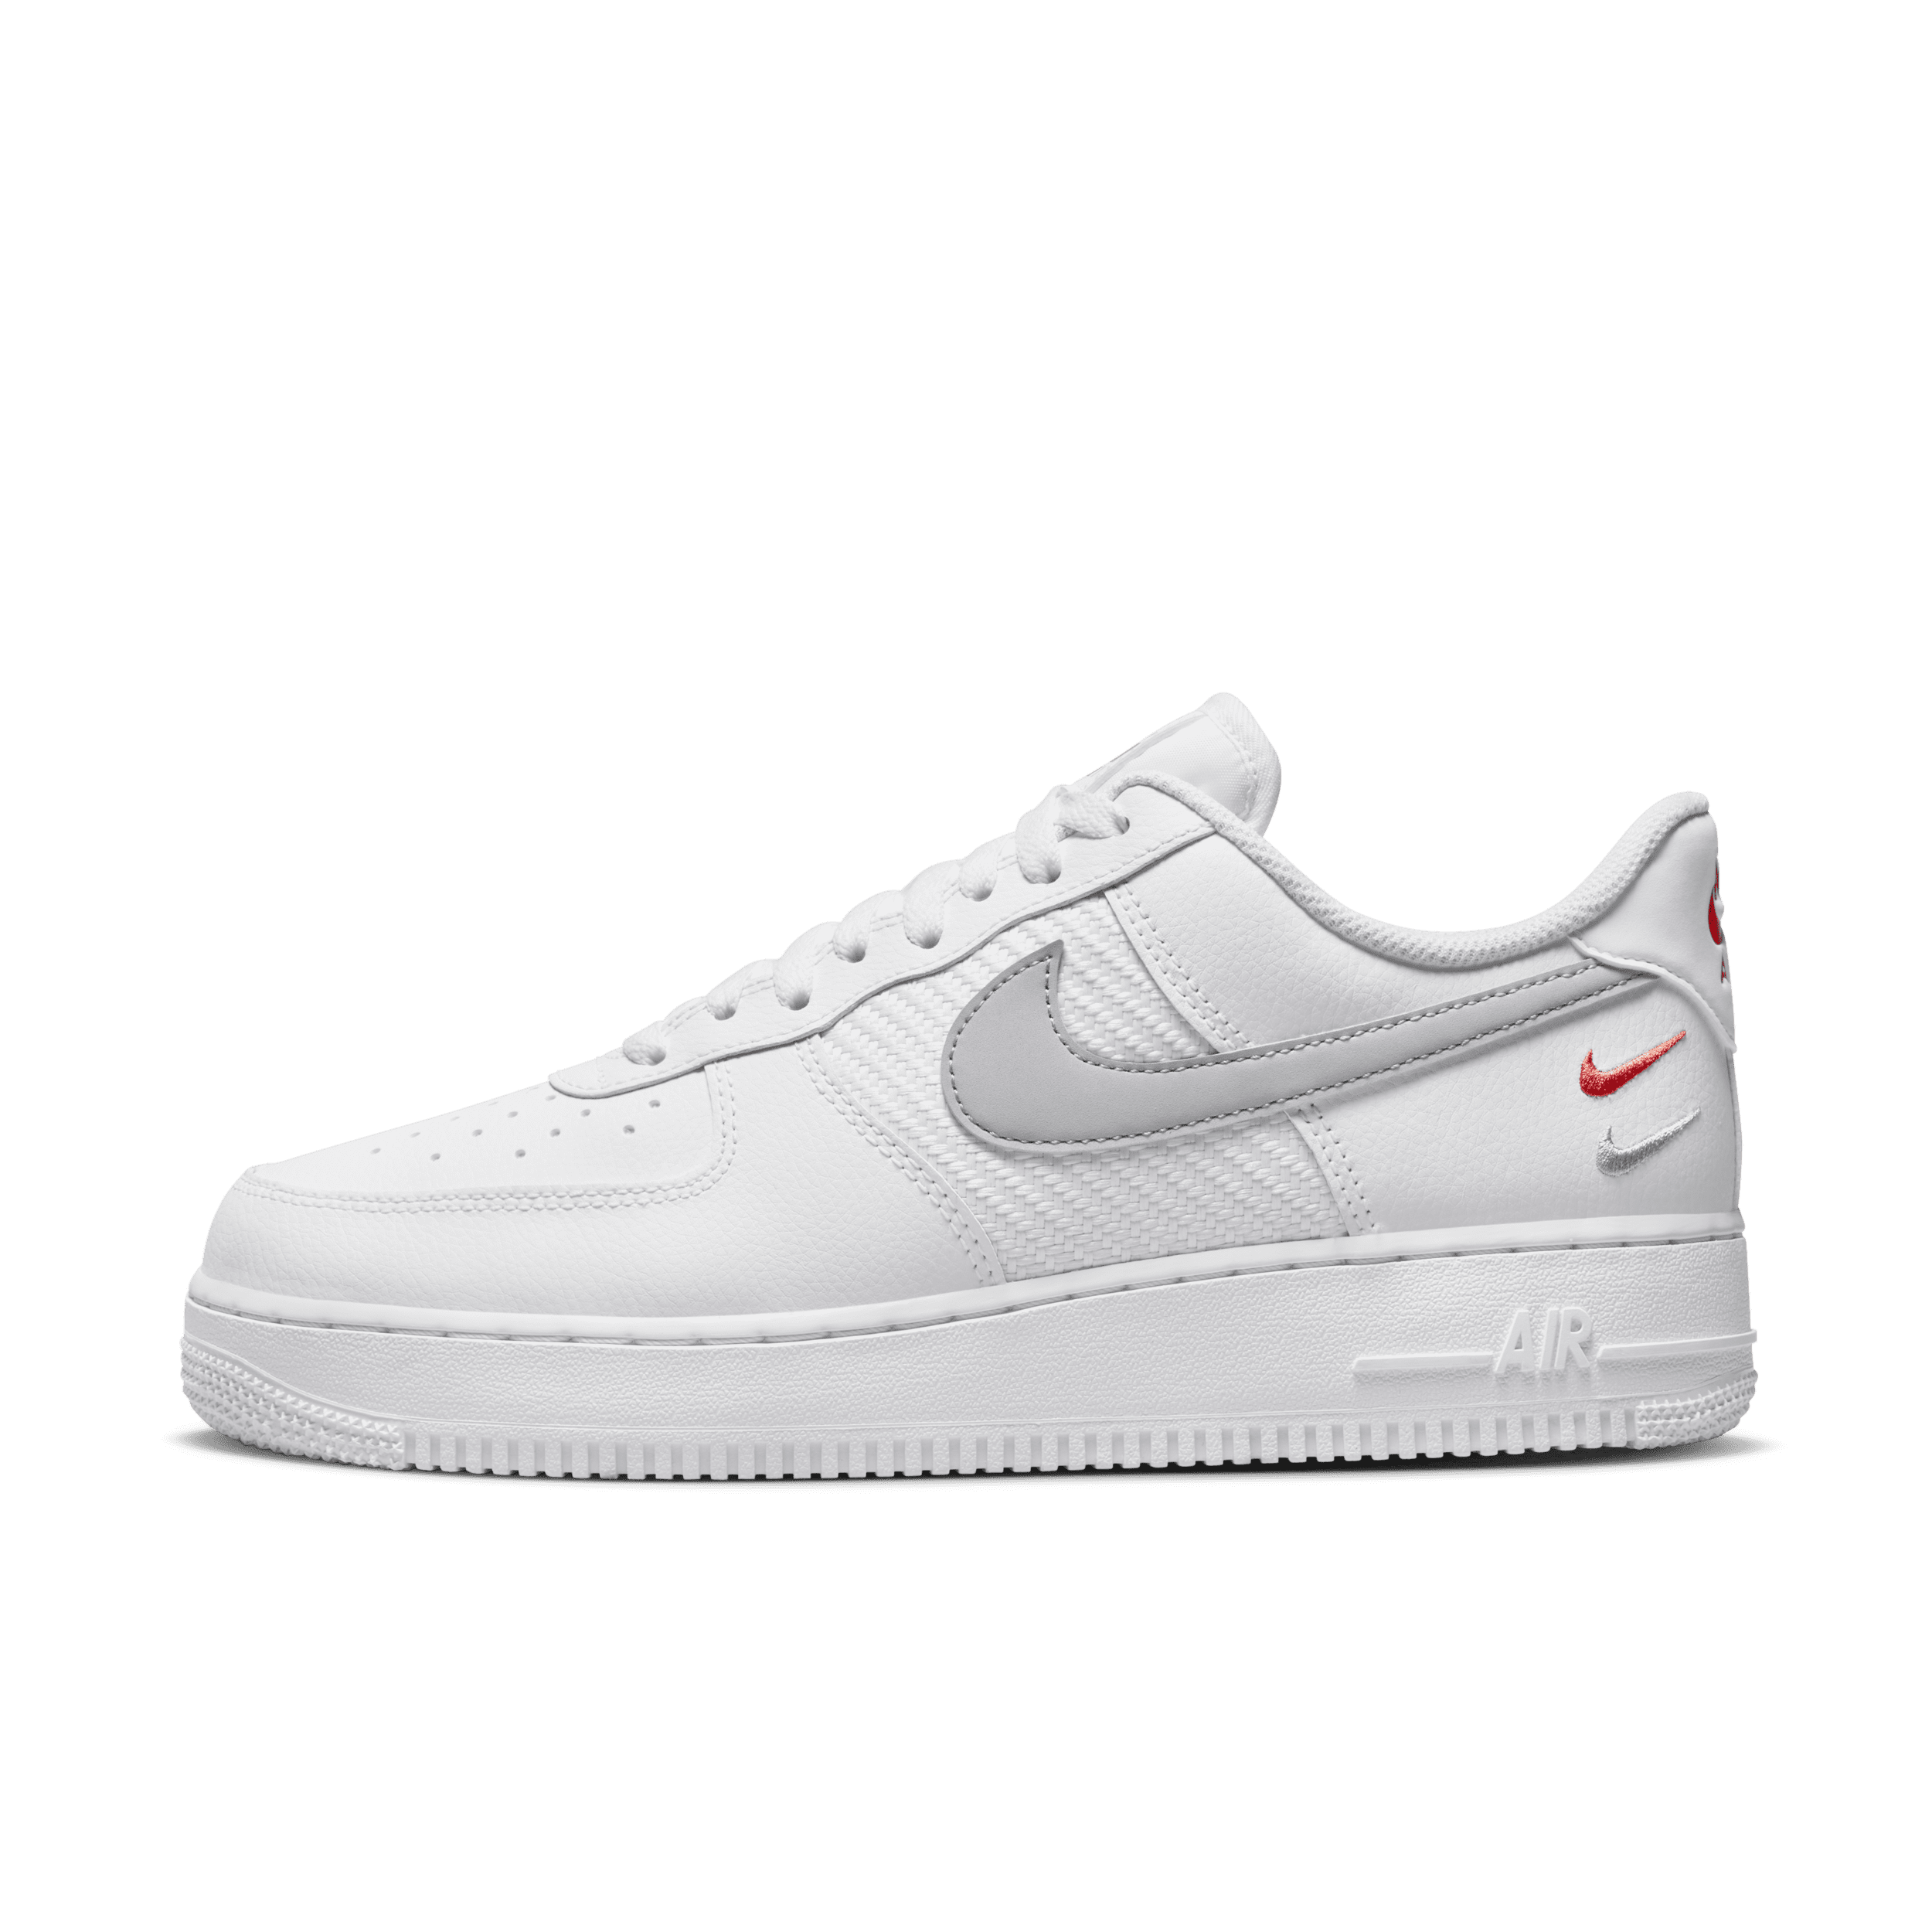 Nike Air Force 1 ’07 Herenschoenen – Wit